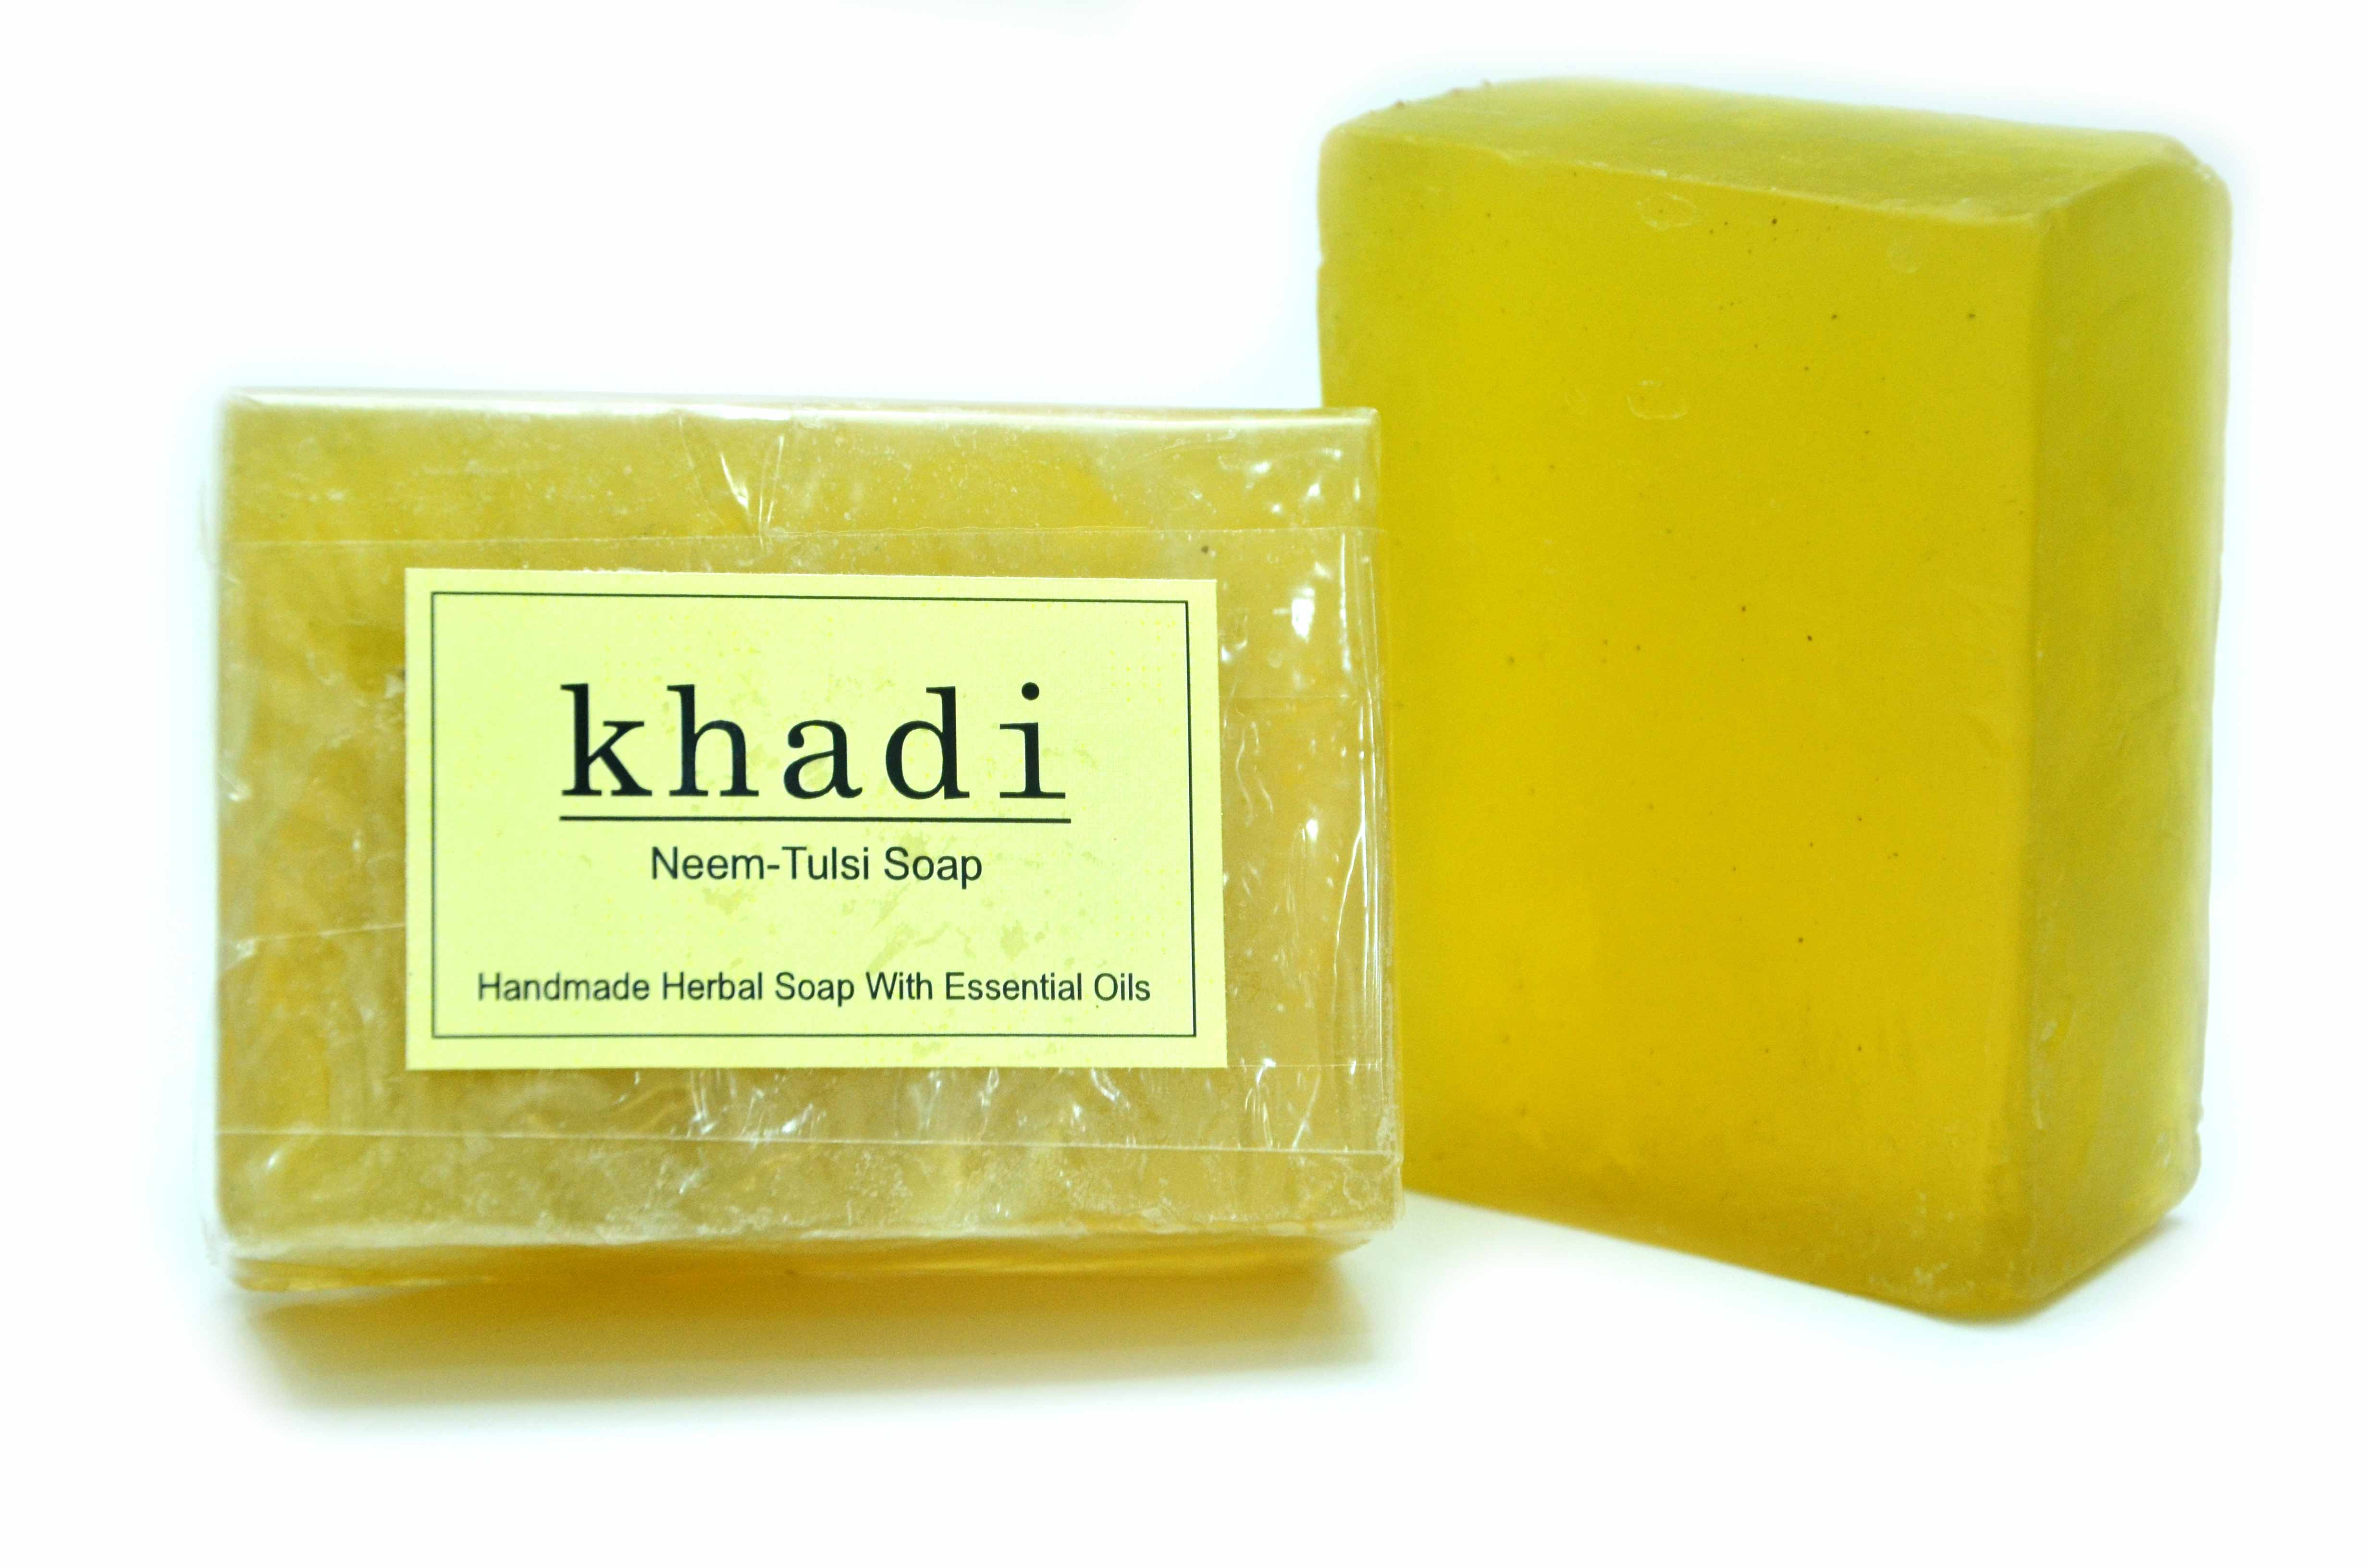 Buy Vagad's Khadi Neem Tulsi Soap at Best Price Online